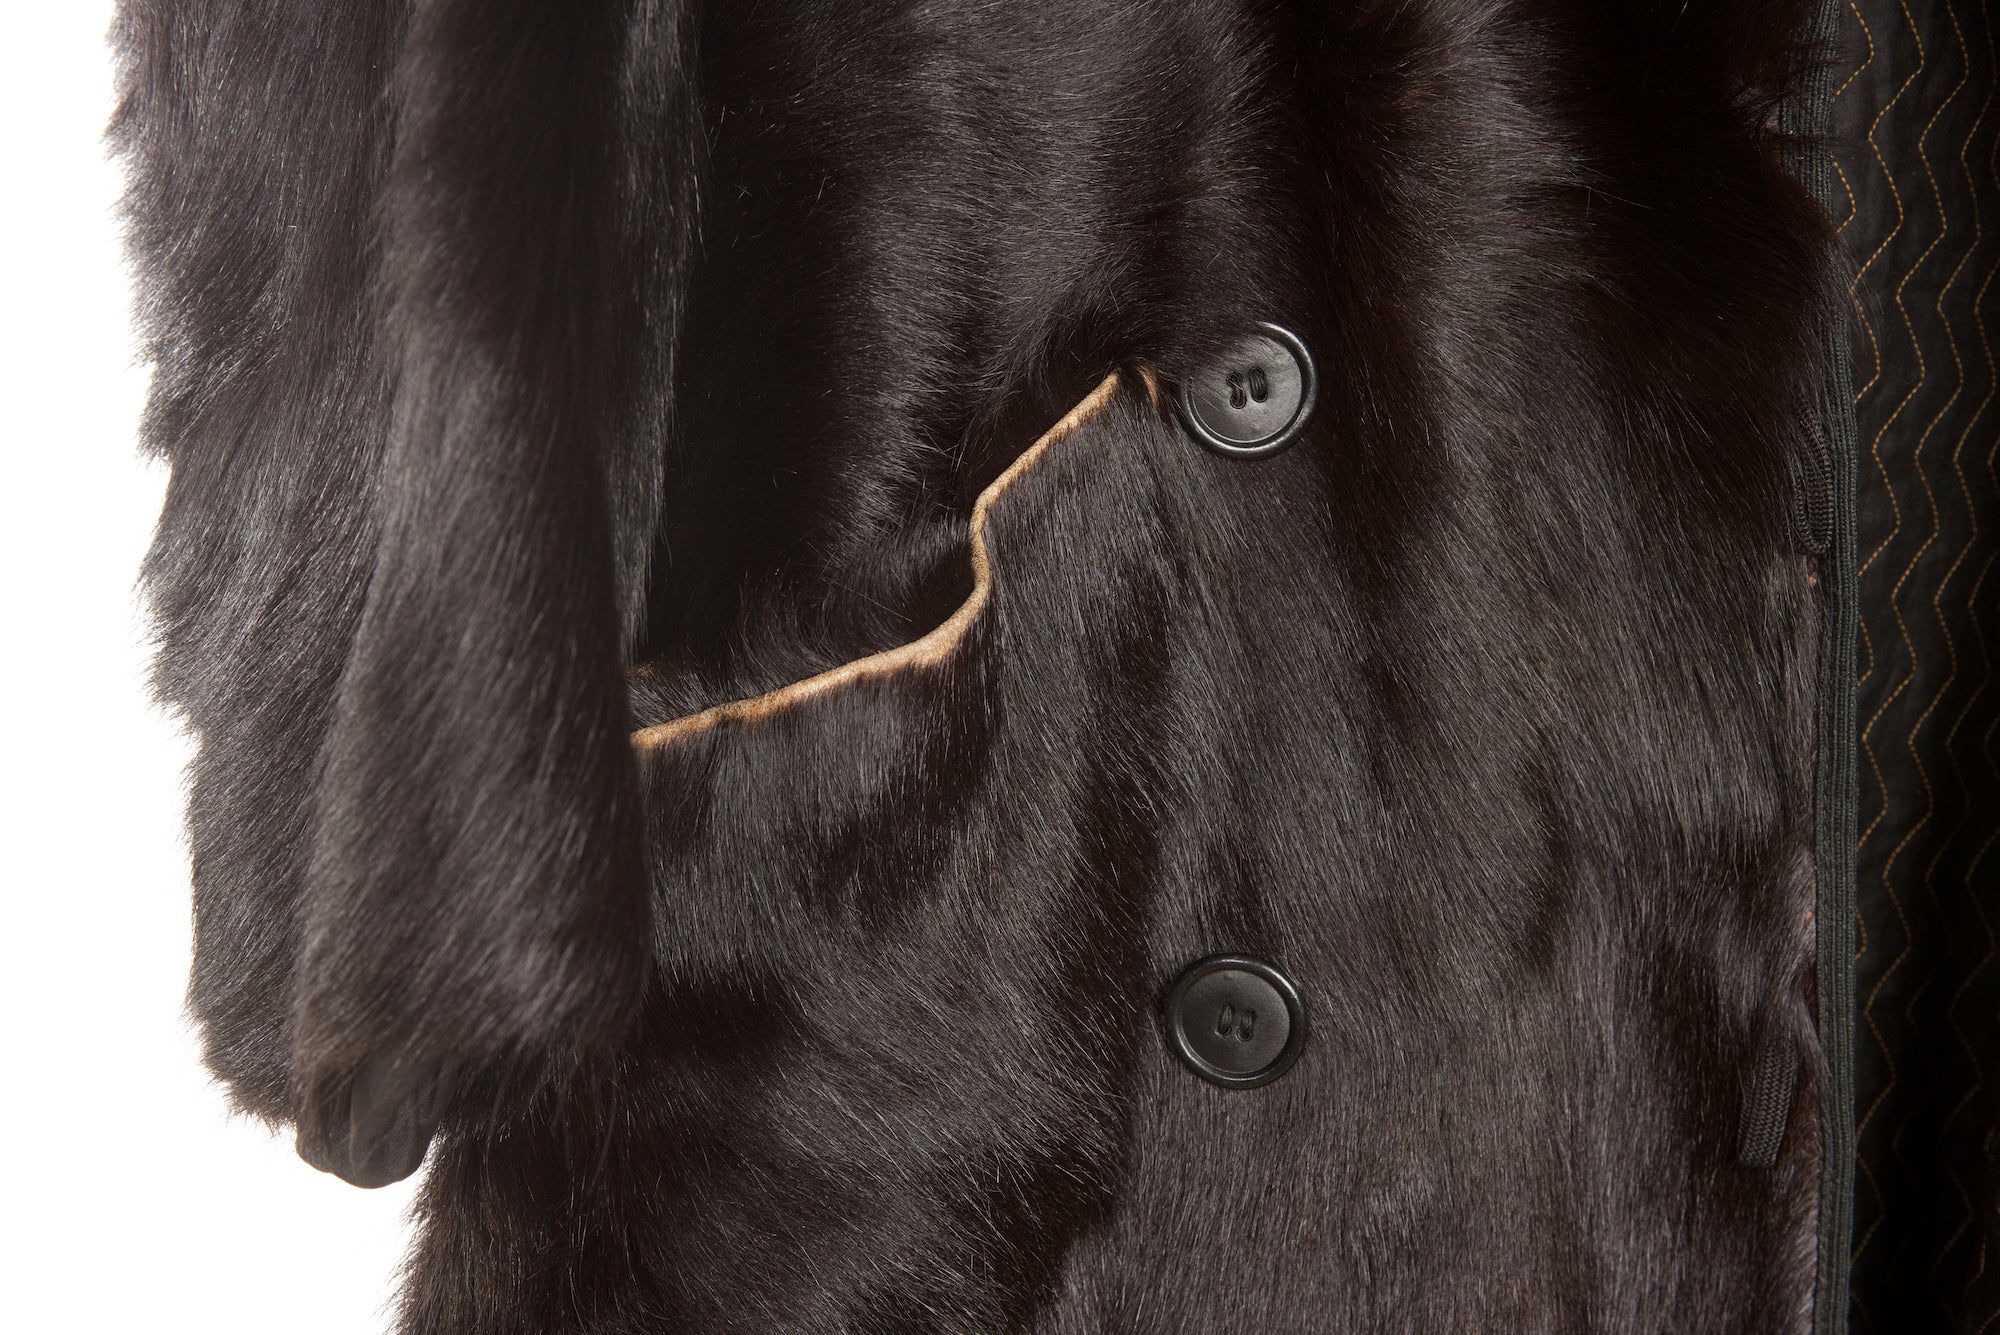 Black Bear Coat by Glover